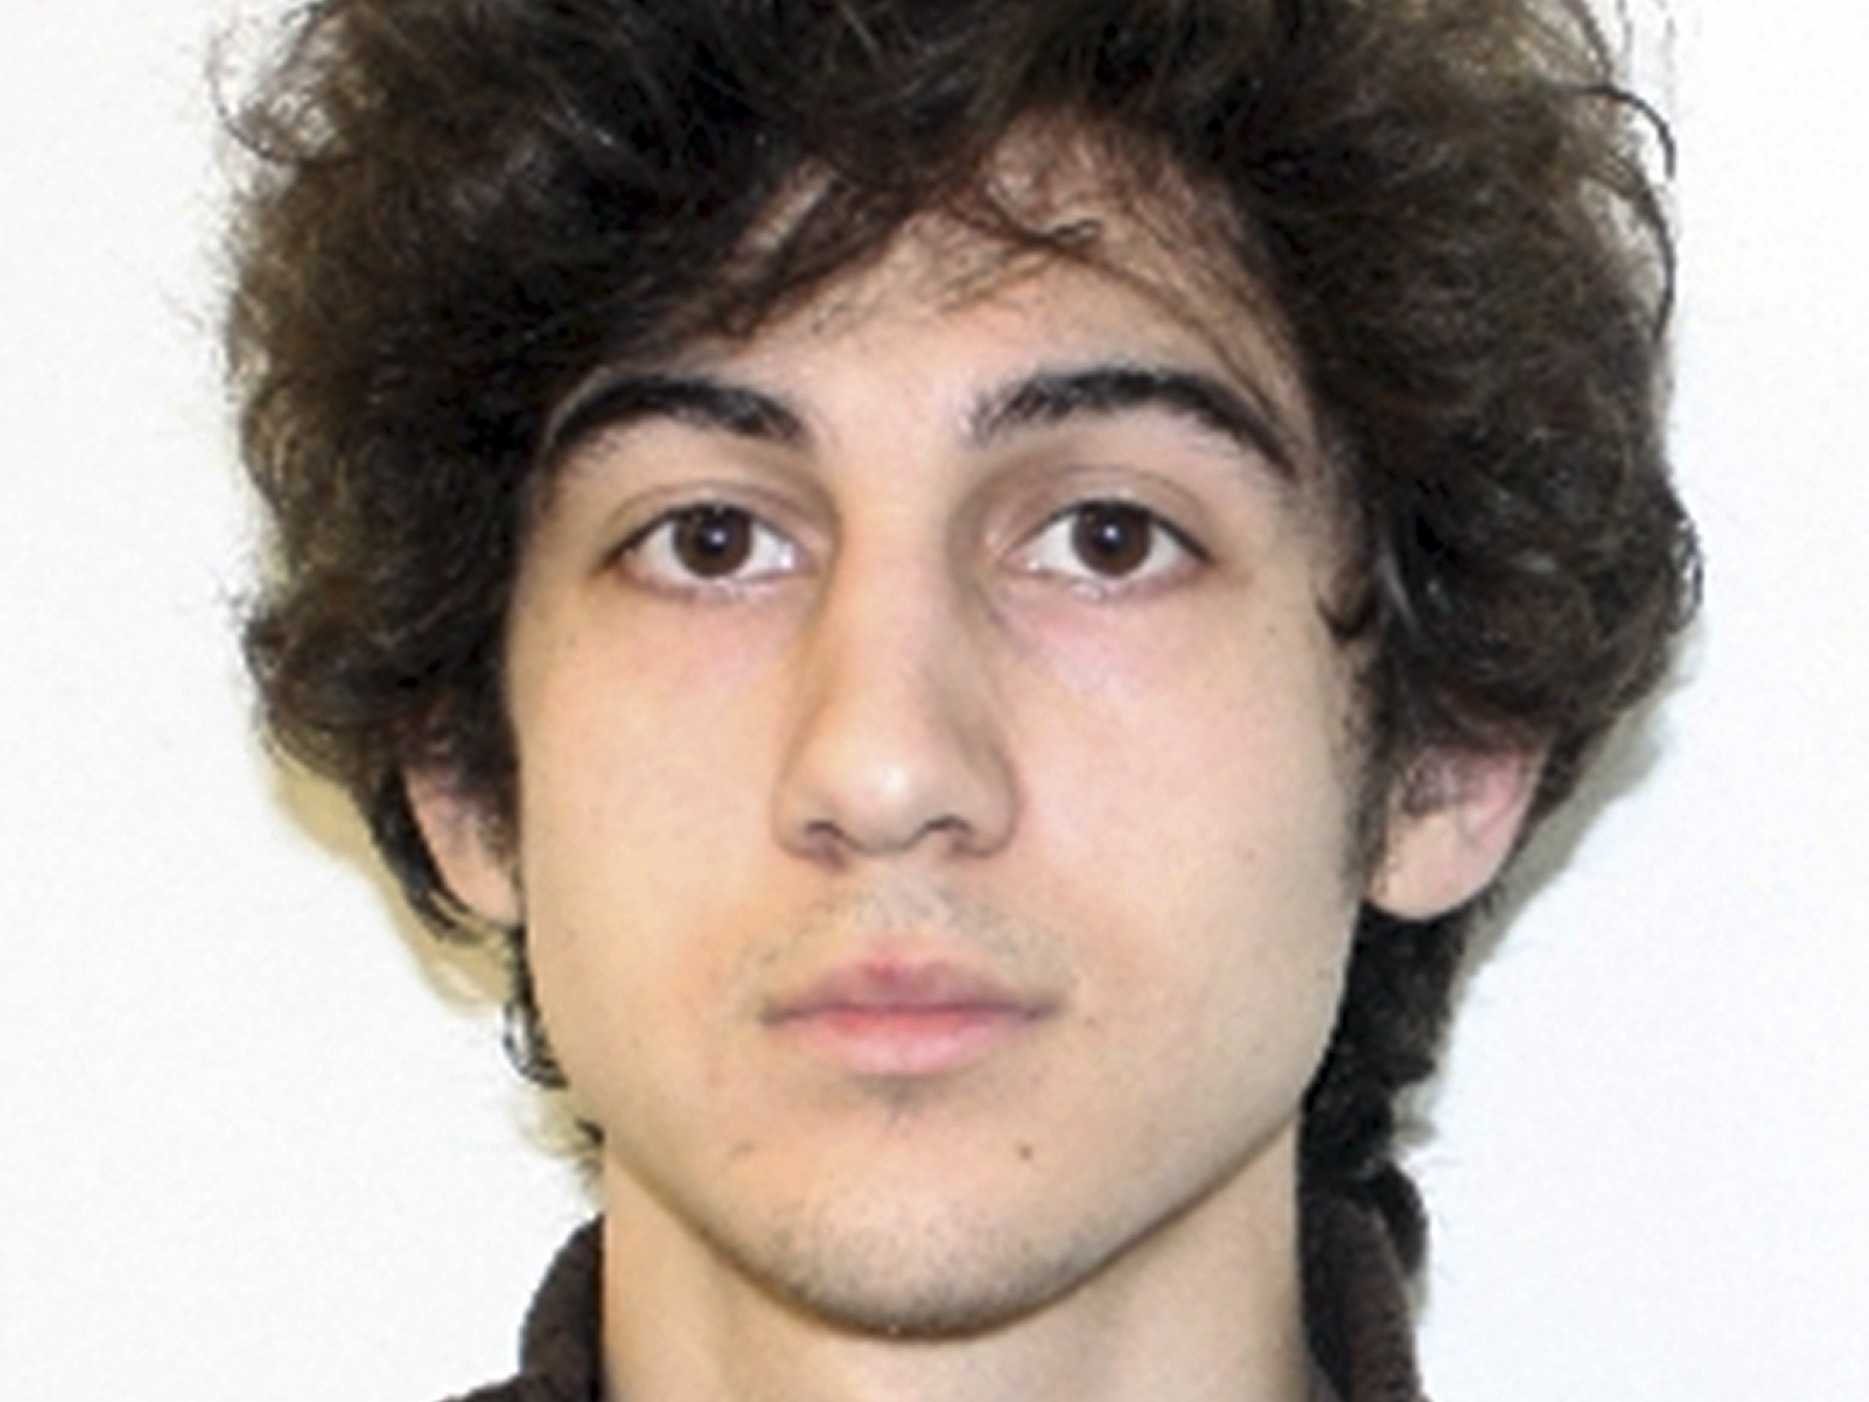 Dzhokhar Tsarnaev, 19, has been charged over the bombings, 